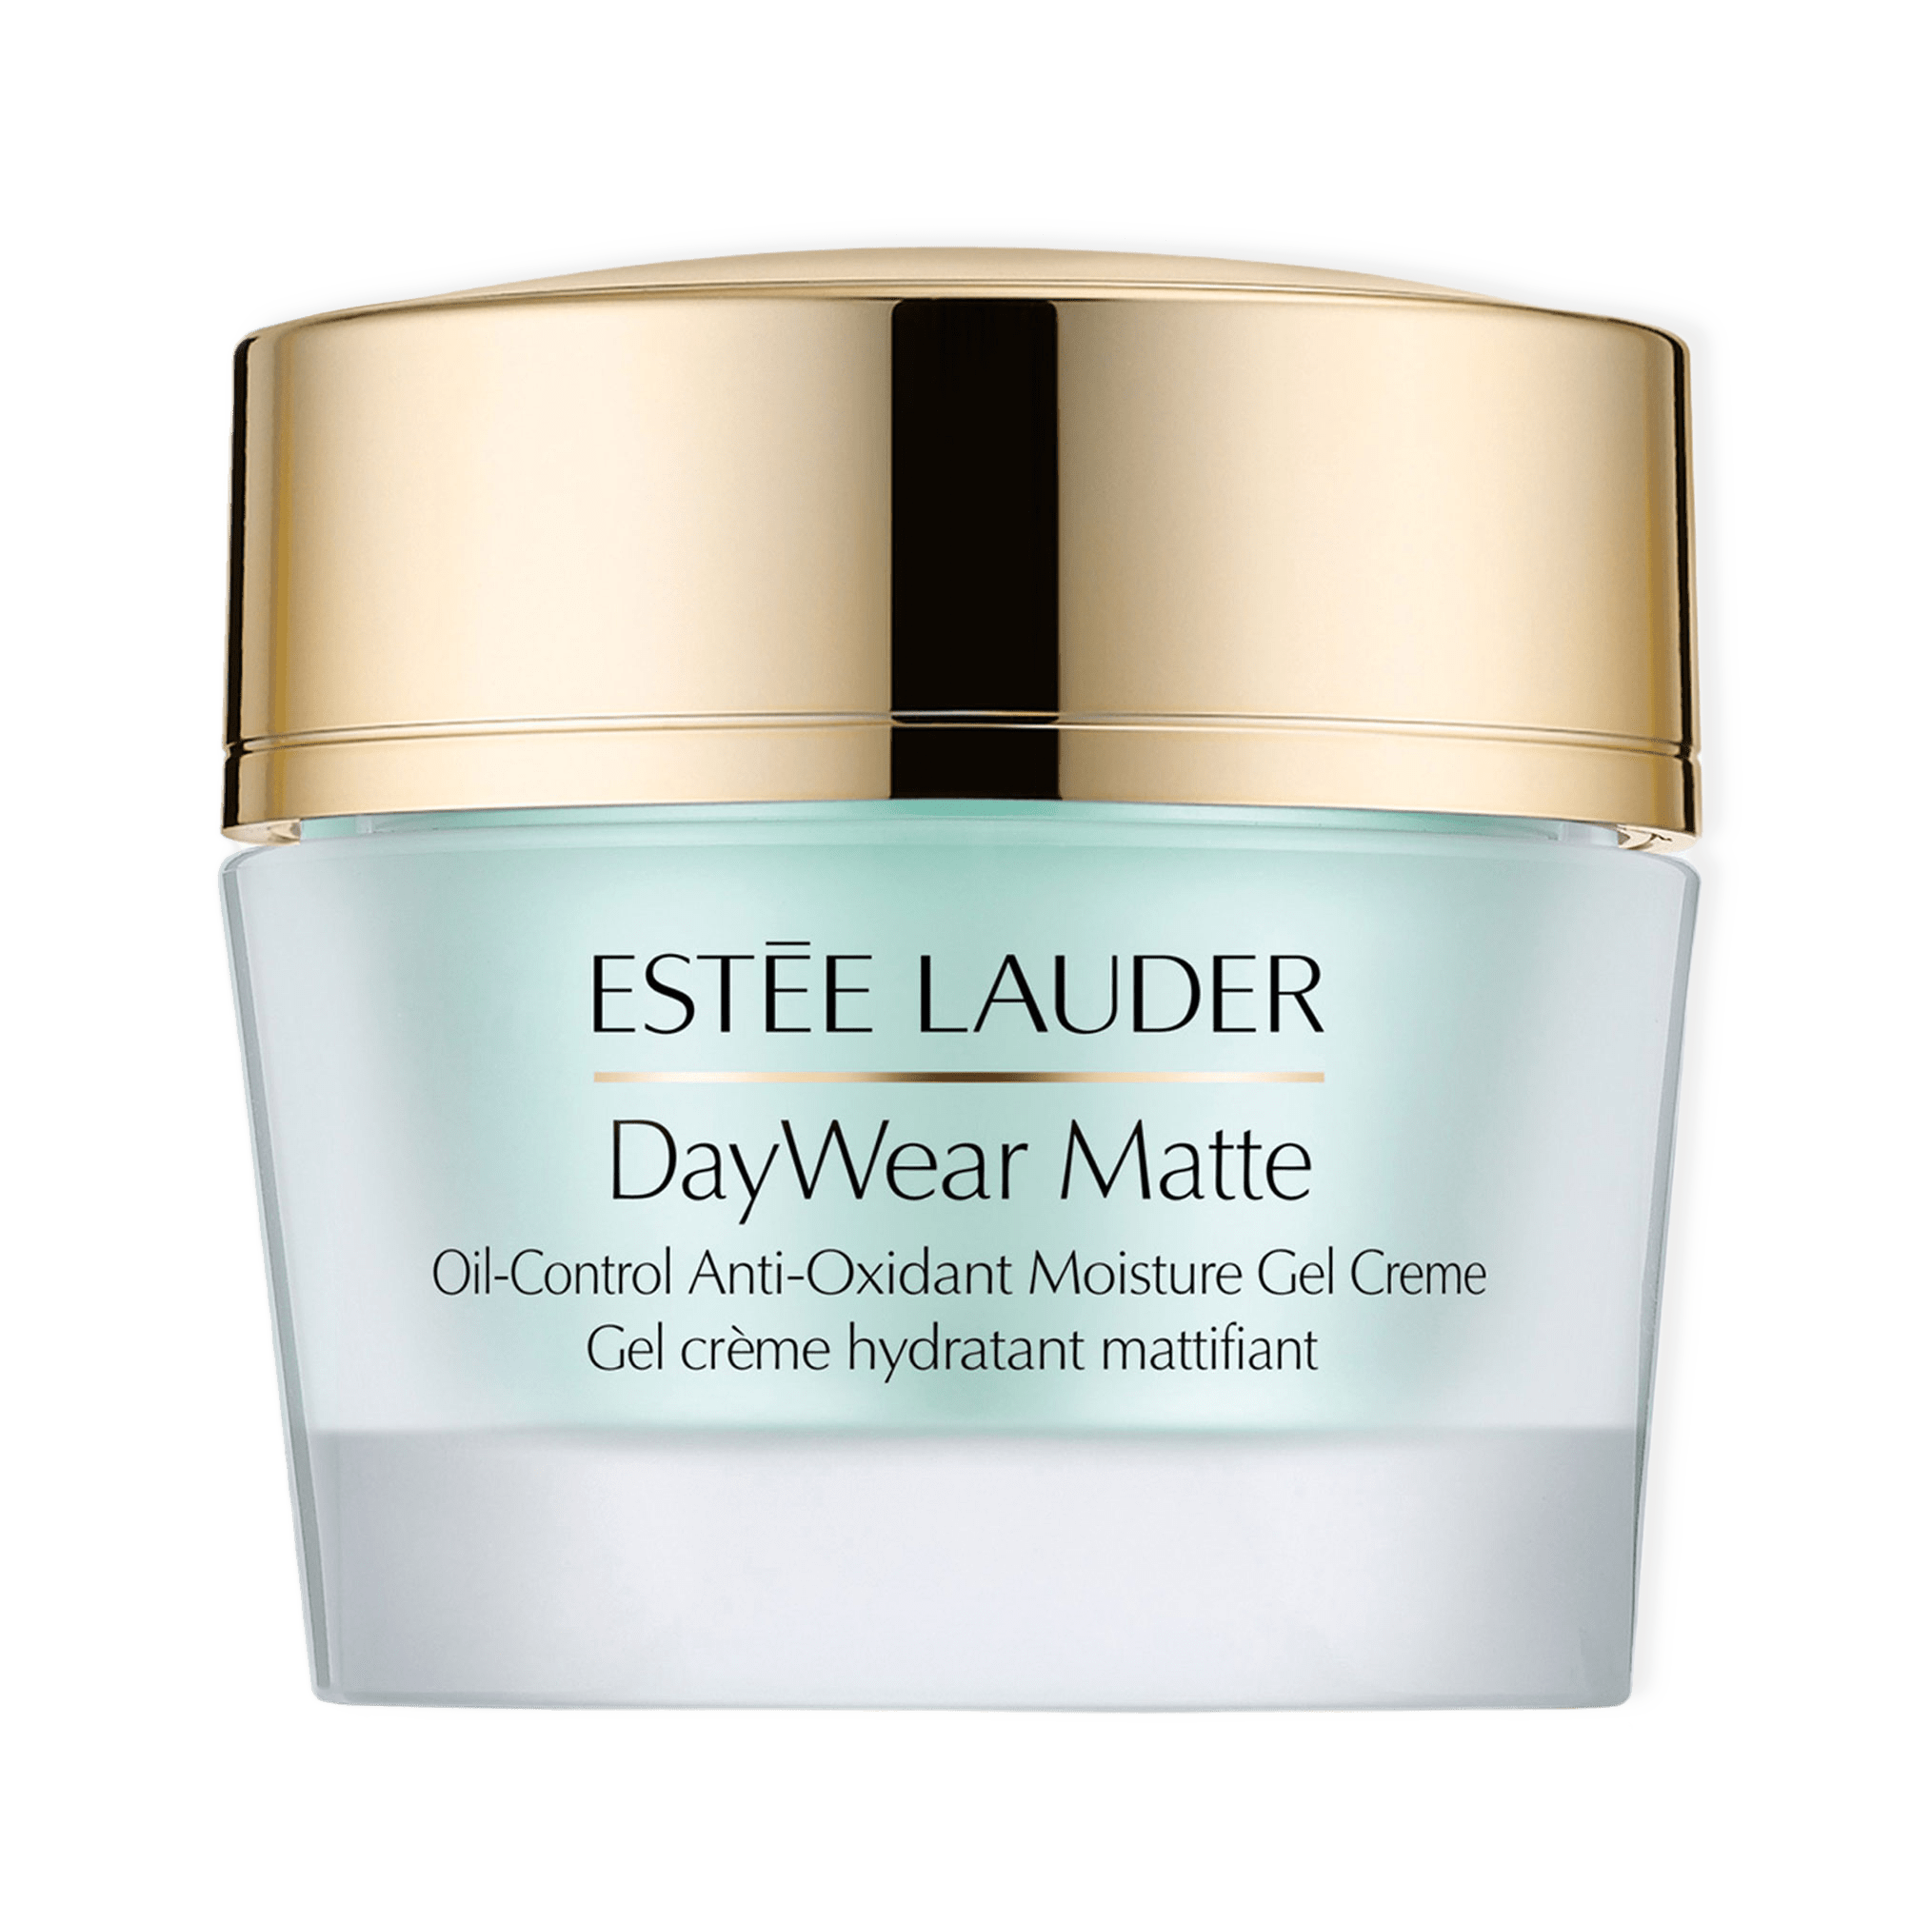 DayWear Matte Oil-Control Anti-Oxidant Moisture Gel Creme, 50 ml från Estée Lauder